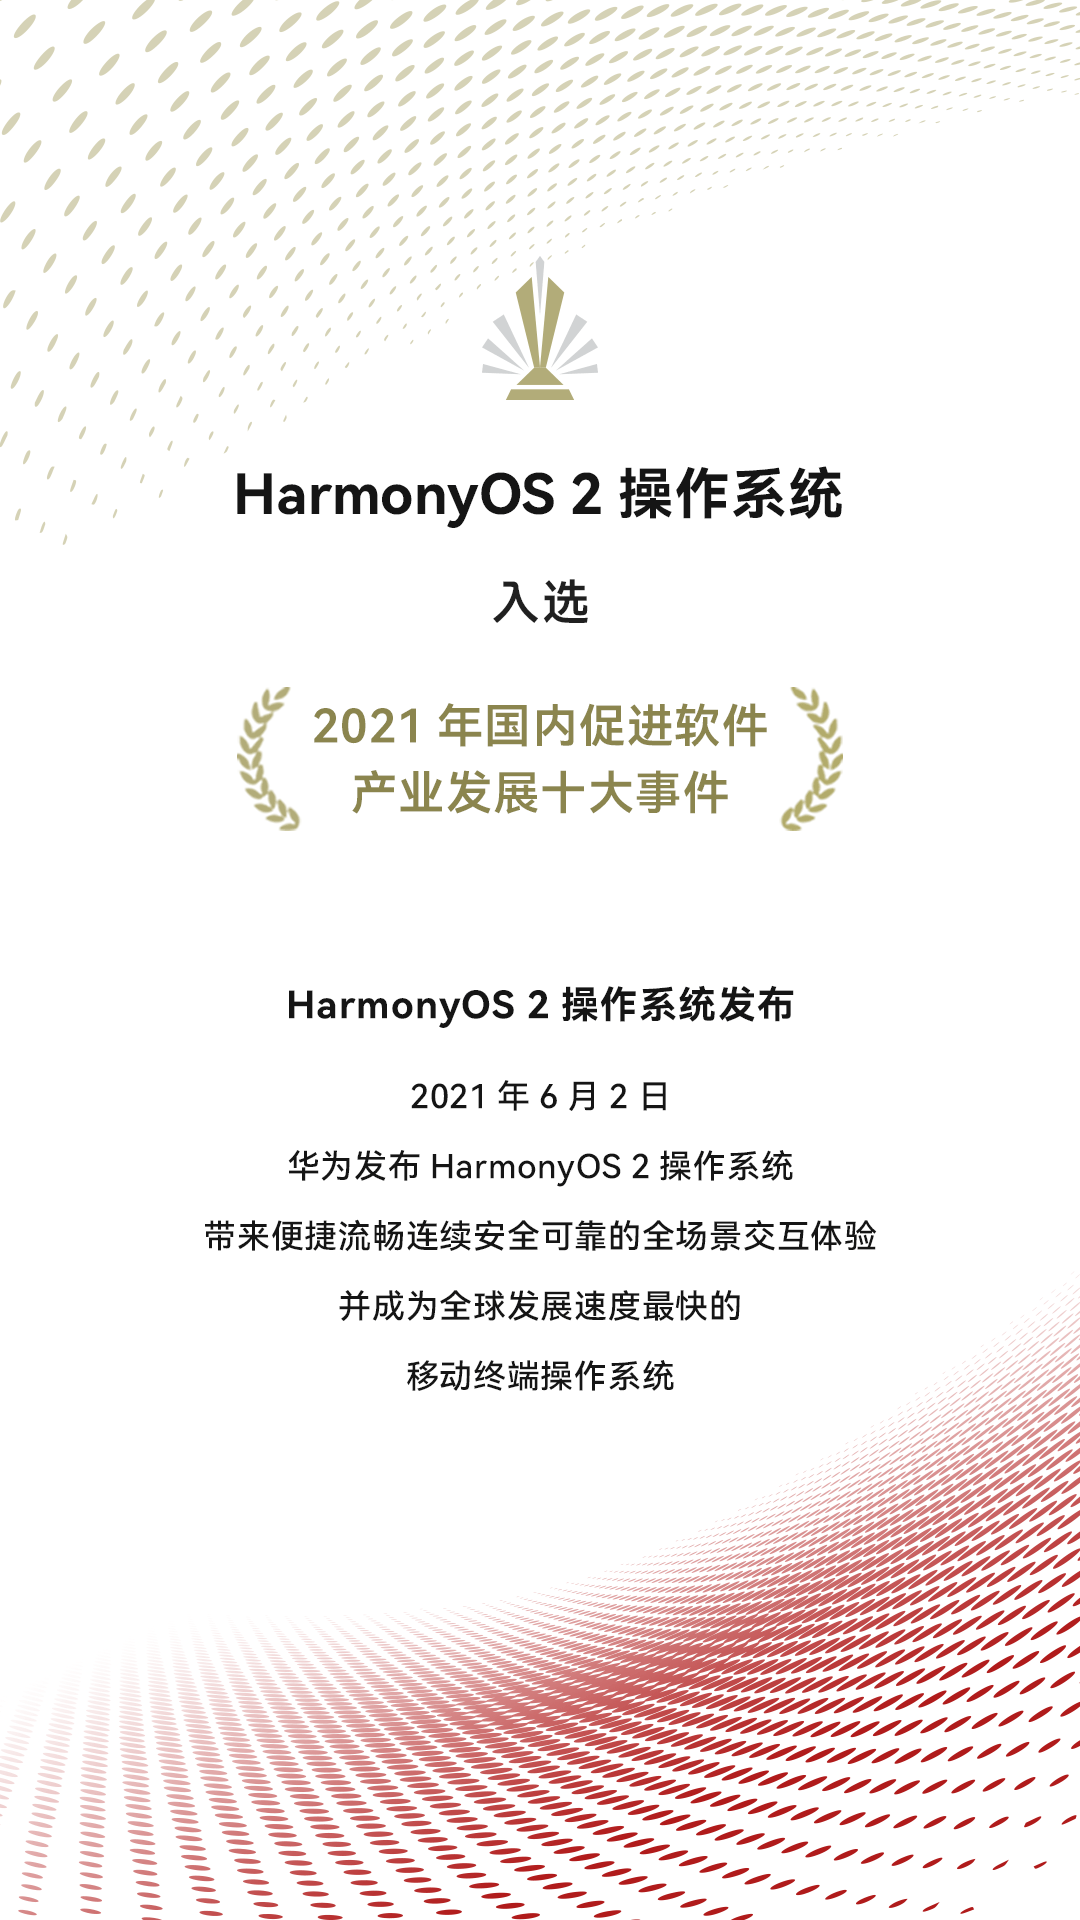 HarmonyOS 2成全球發展最快移動系統，入選2021軟件產業十大事件